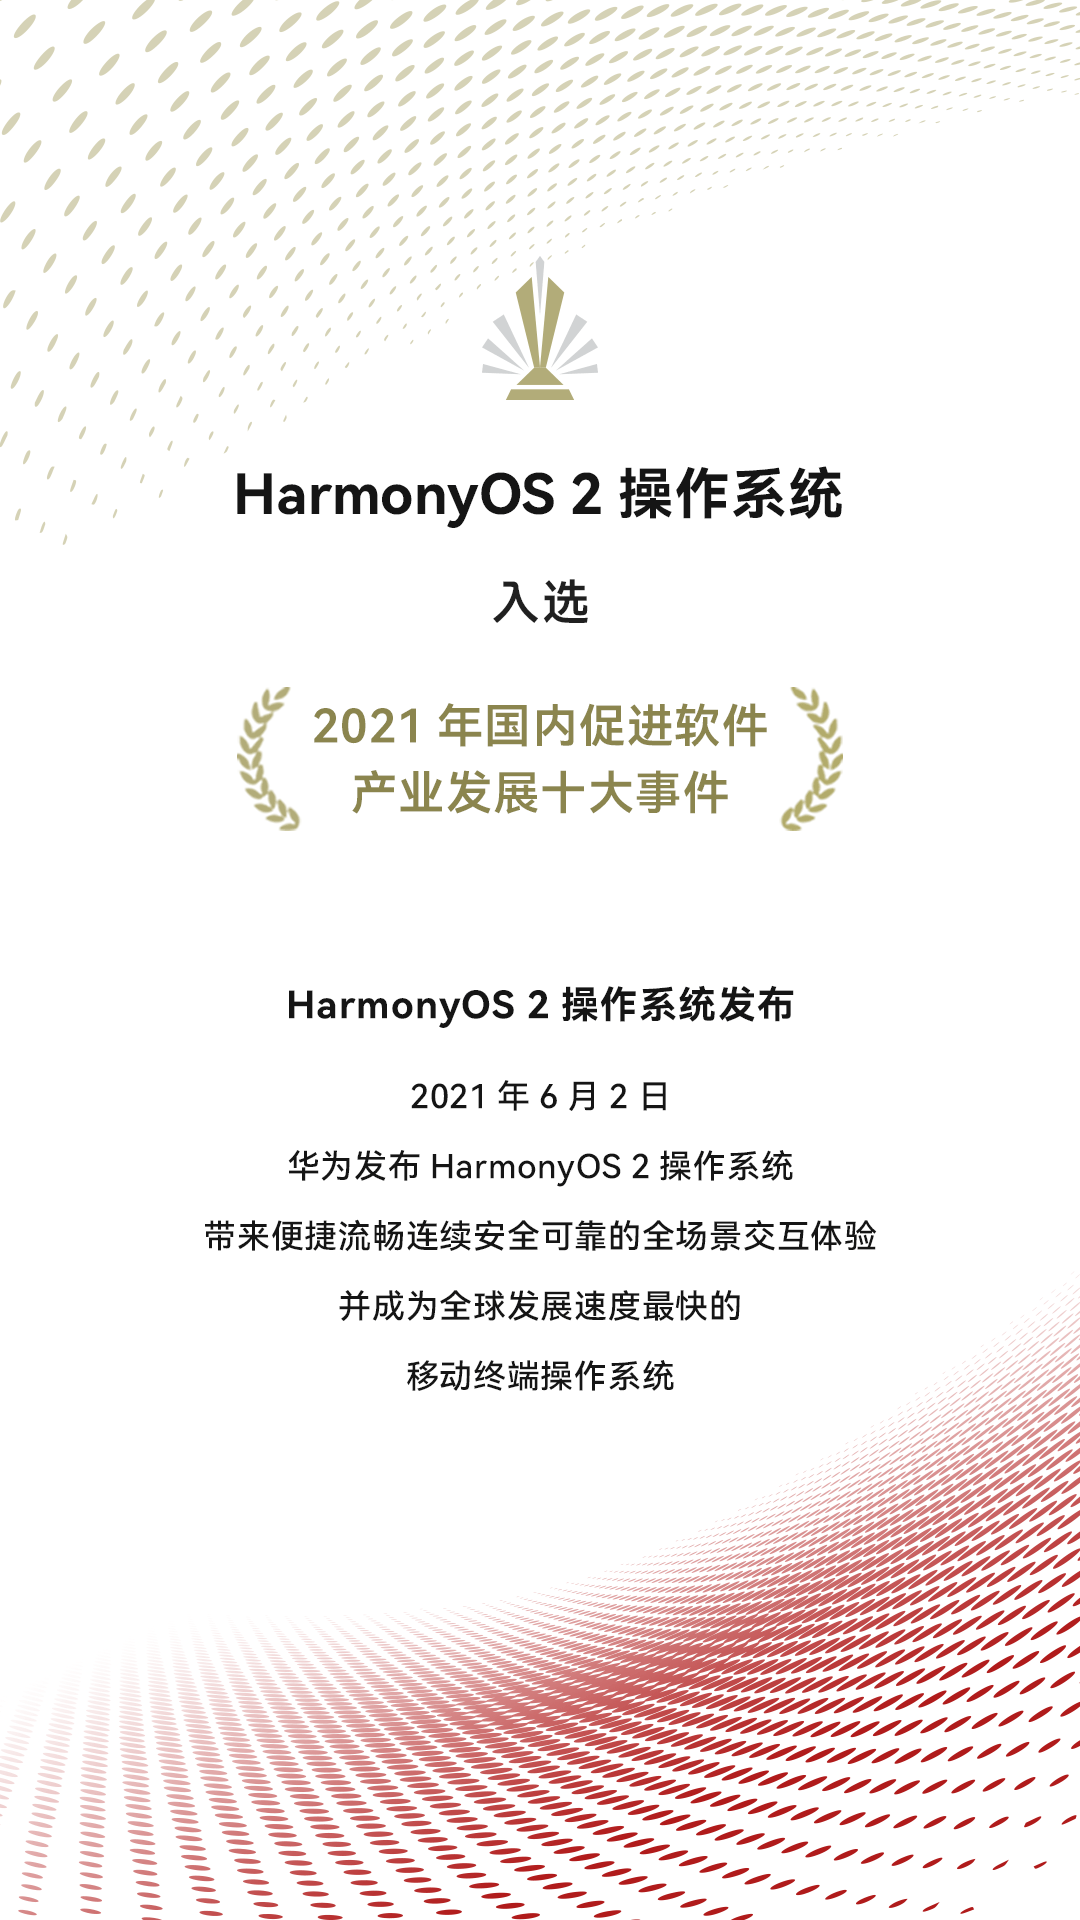 HarmonyOS 2成全球發展最快移動系統，入選2021軟件產業十大事件